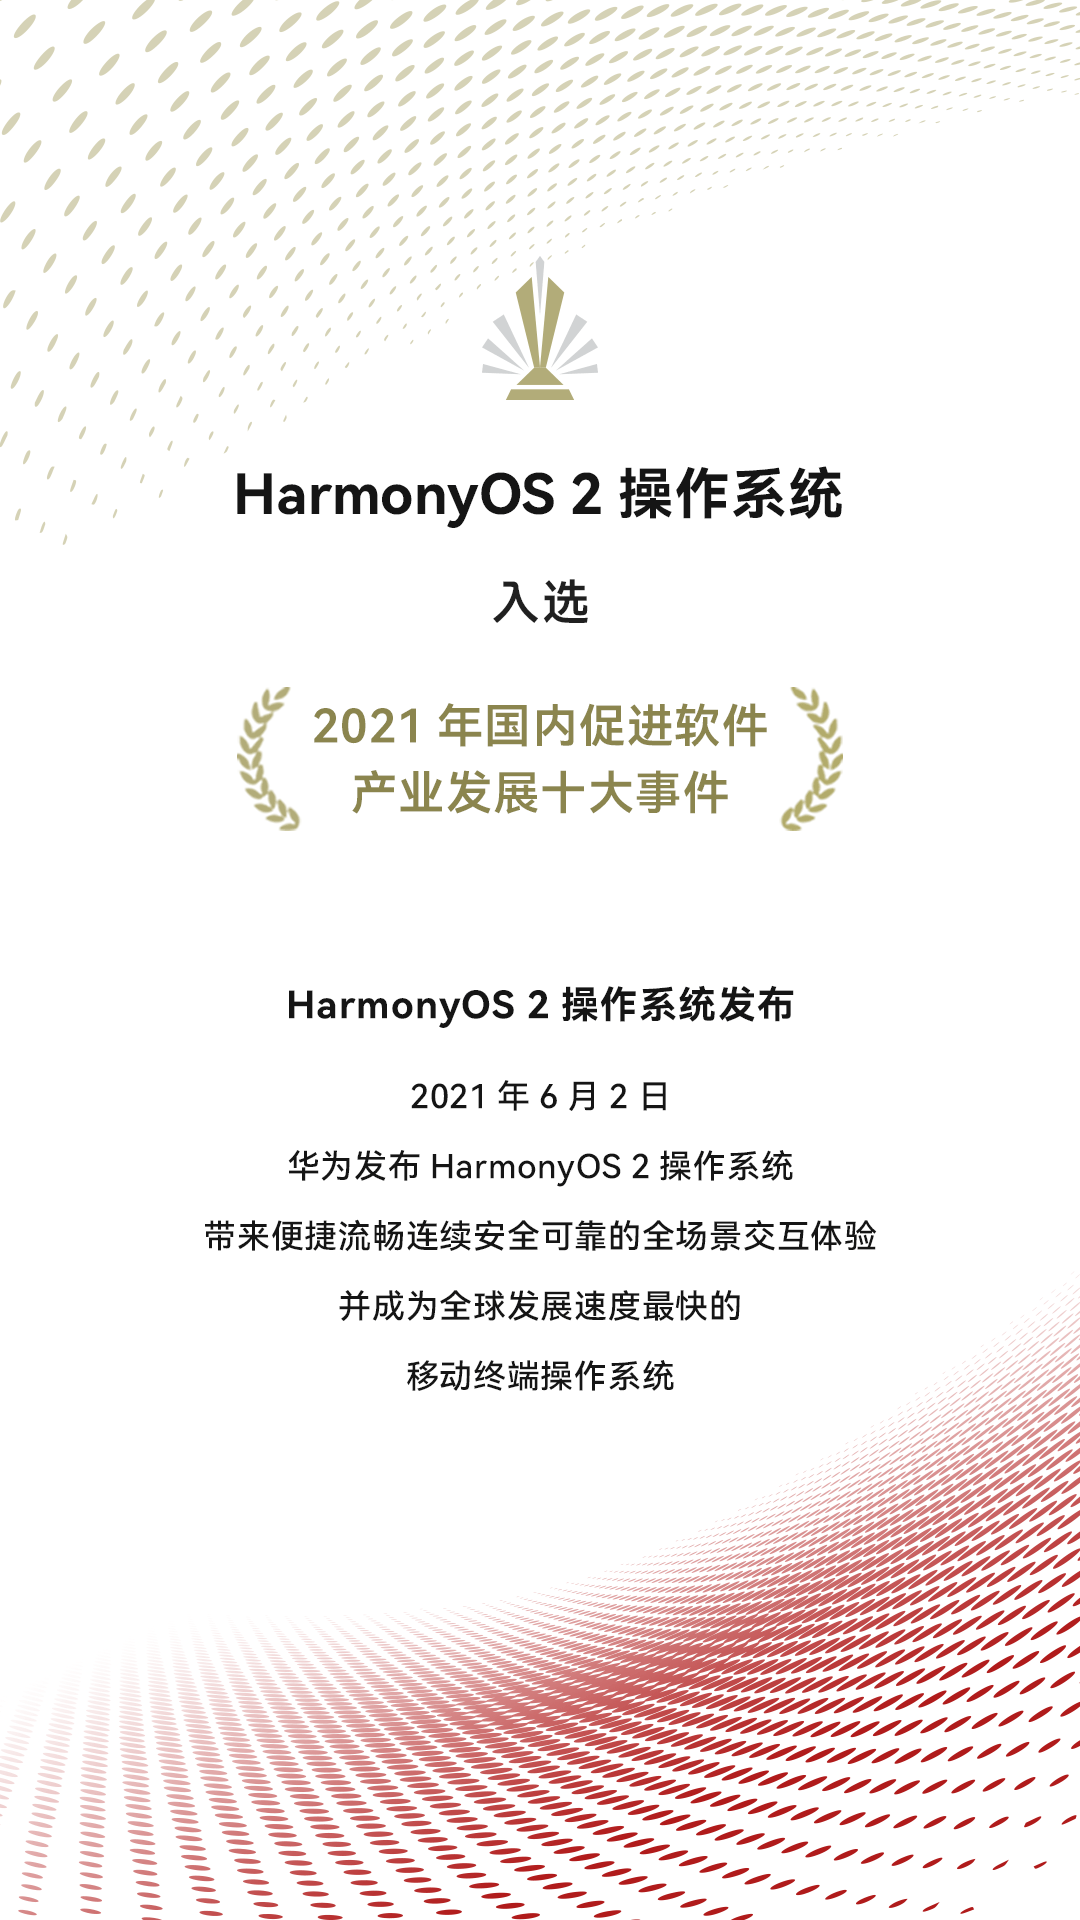 HarmonyOS 2成全球發展最快移動系統，入選2021軟件產業十大事件